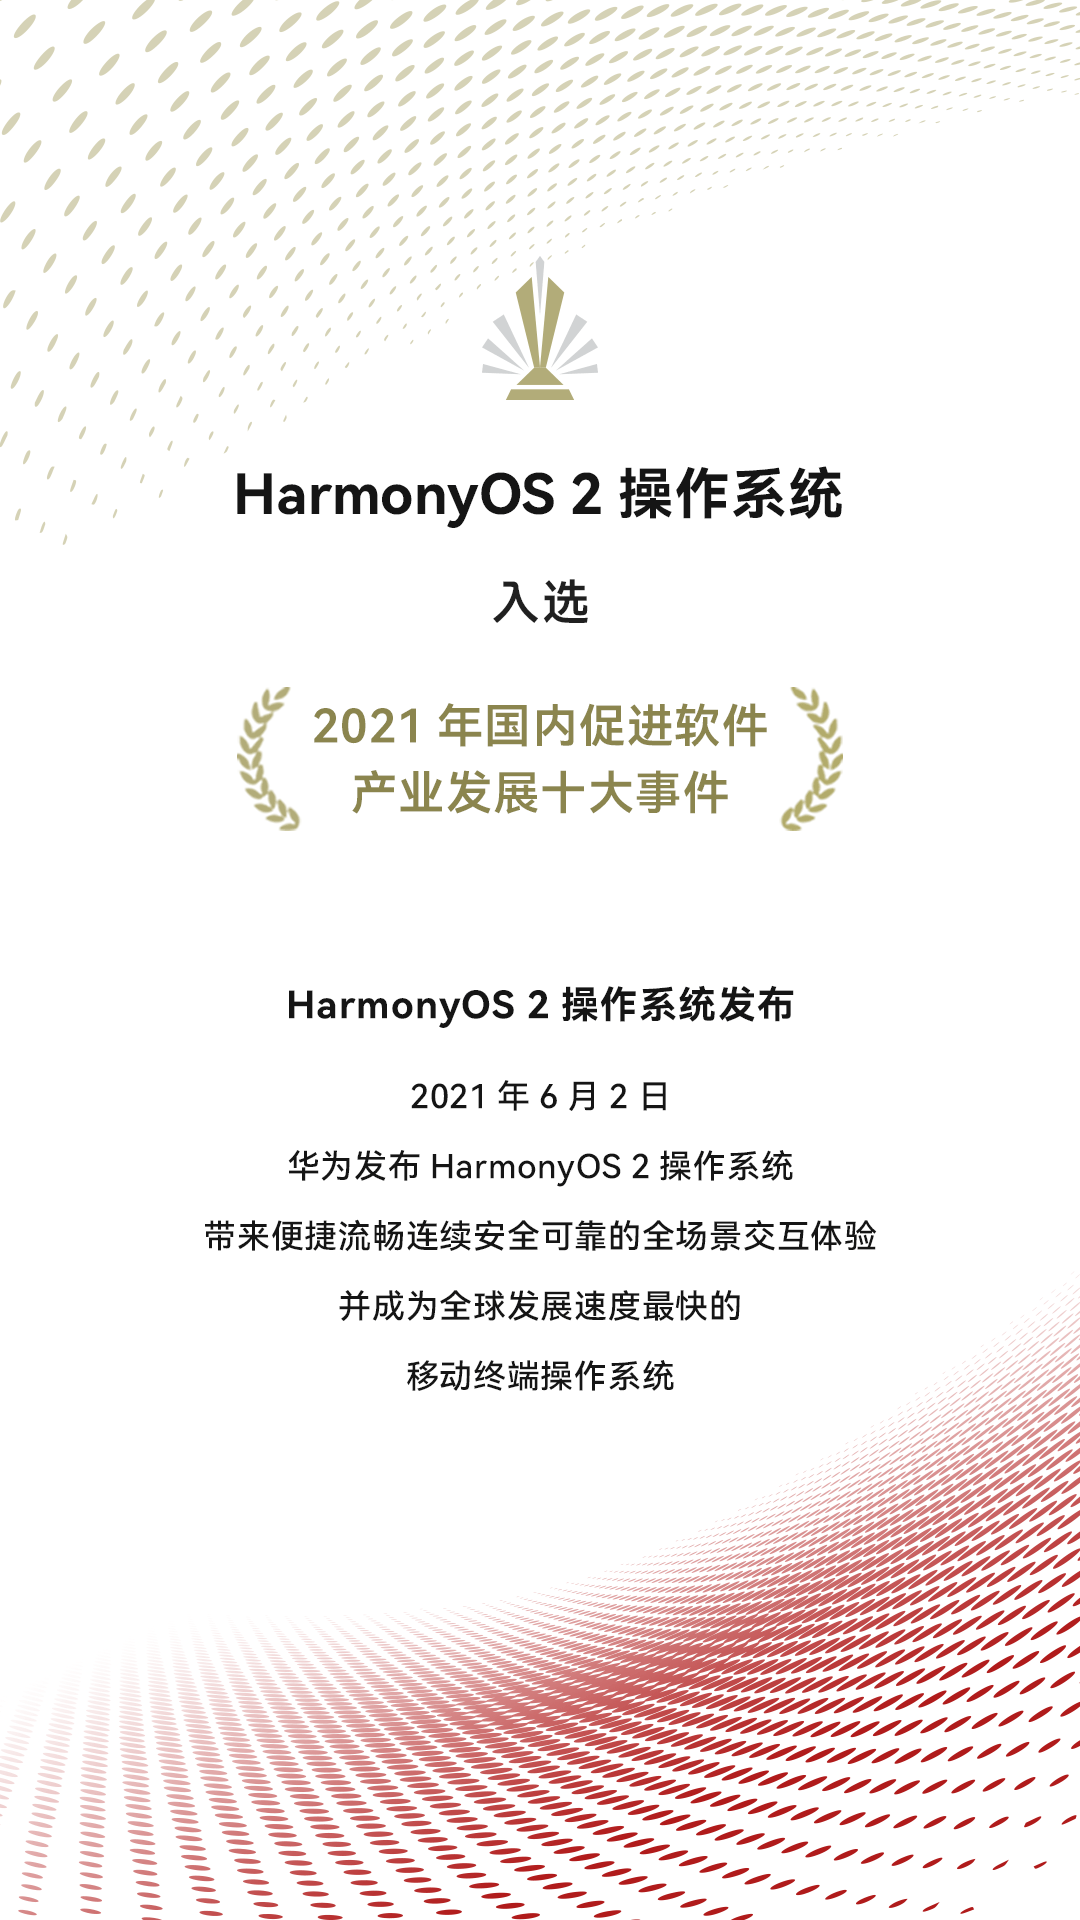 HarmonyOS 2成全球發展最快移動系統，入選2021軟件產業十大事件